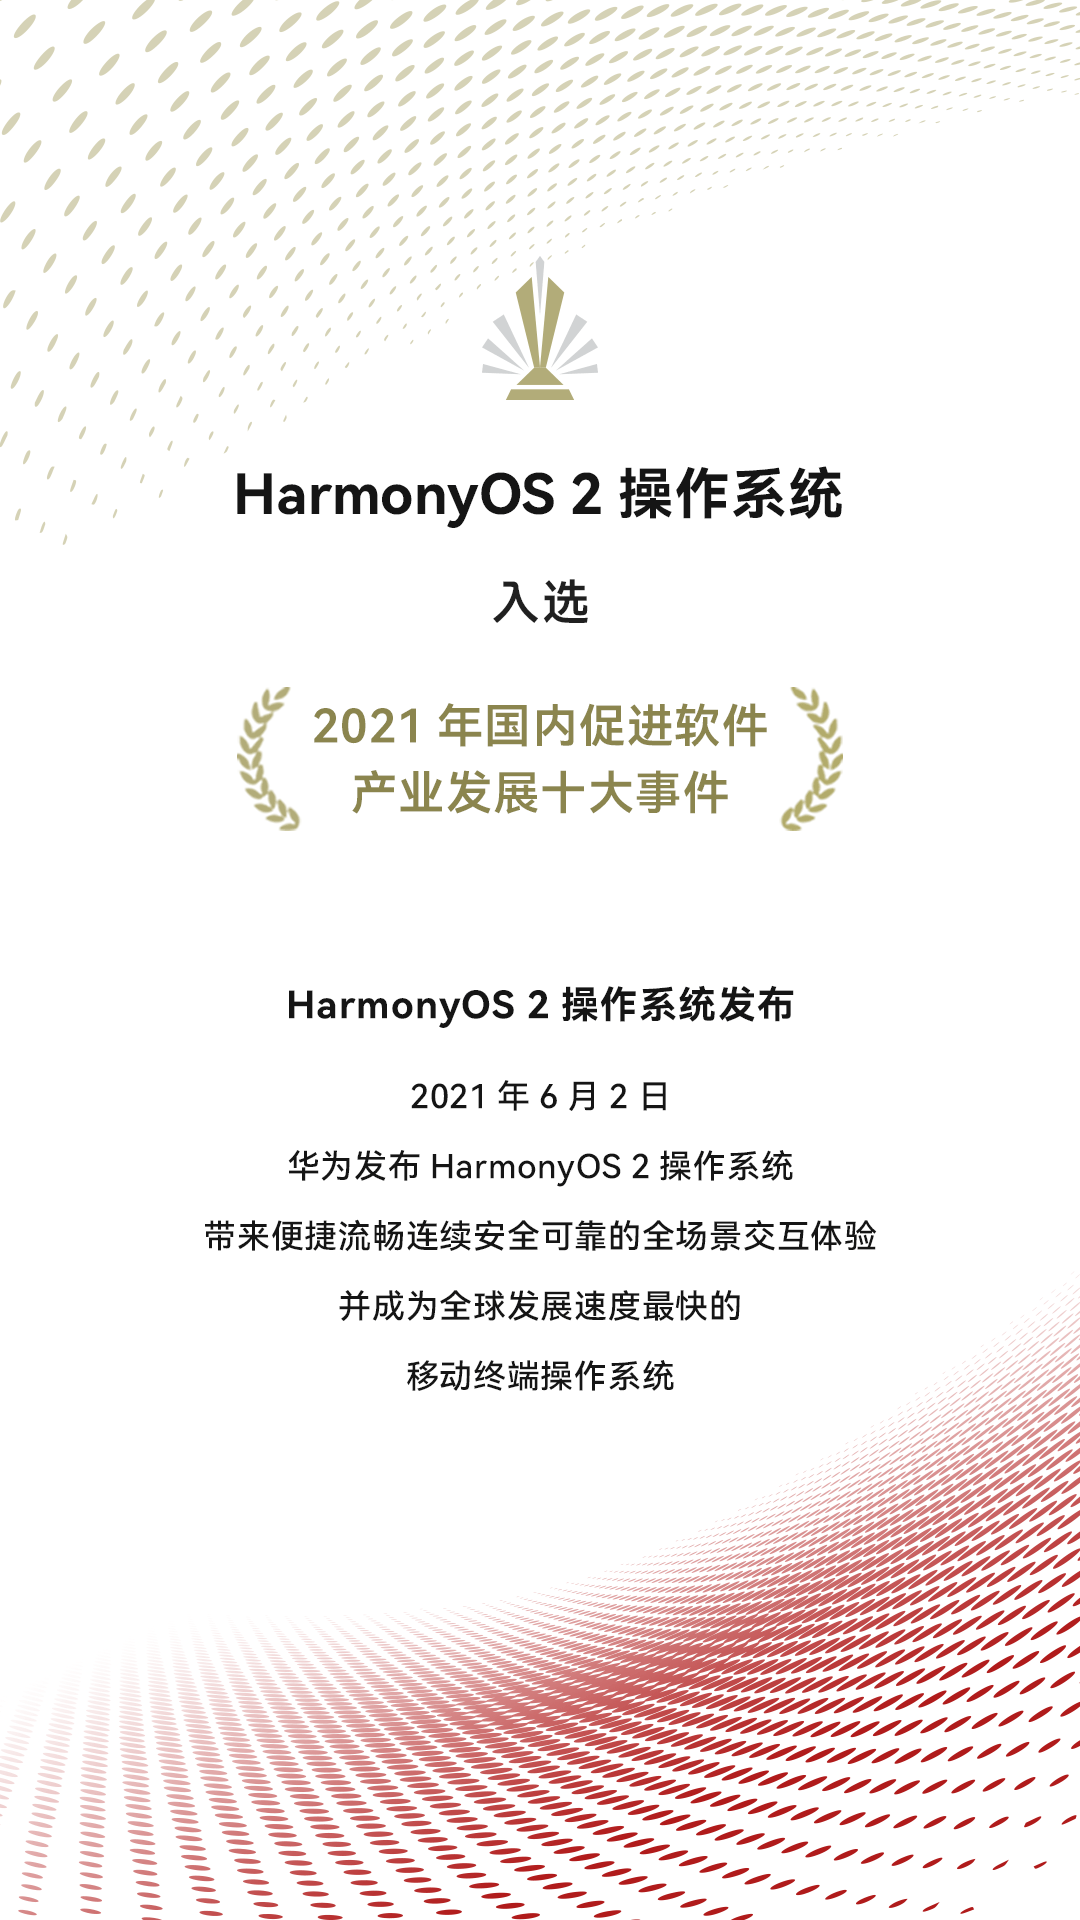 HarmonyOS 2成全球發展最快移動系統，入選2021軟件產業十大事件